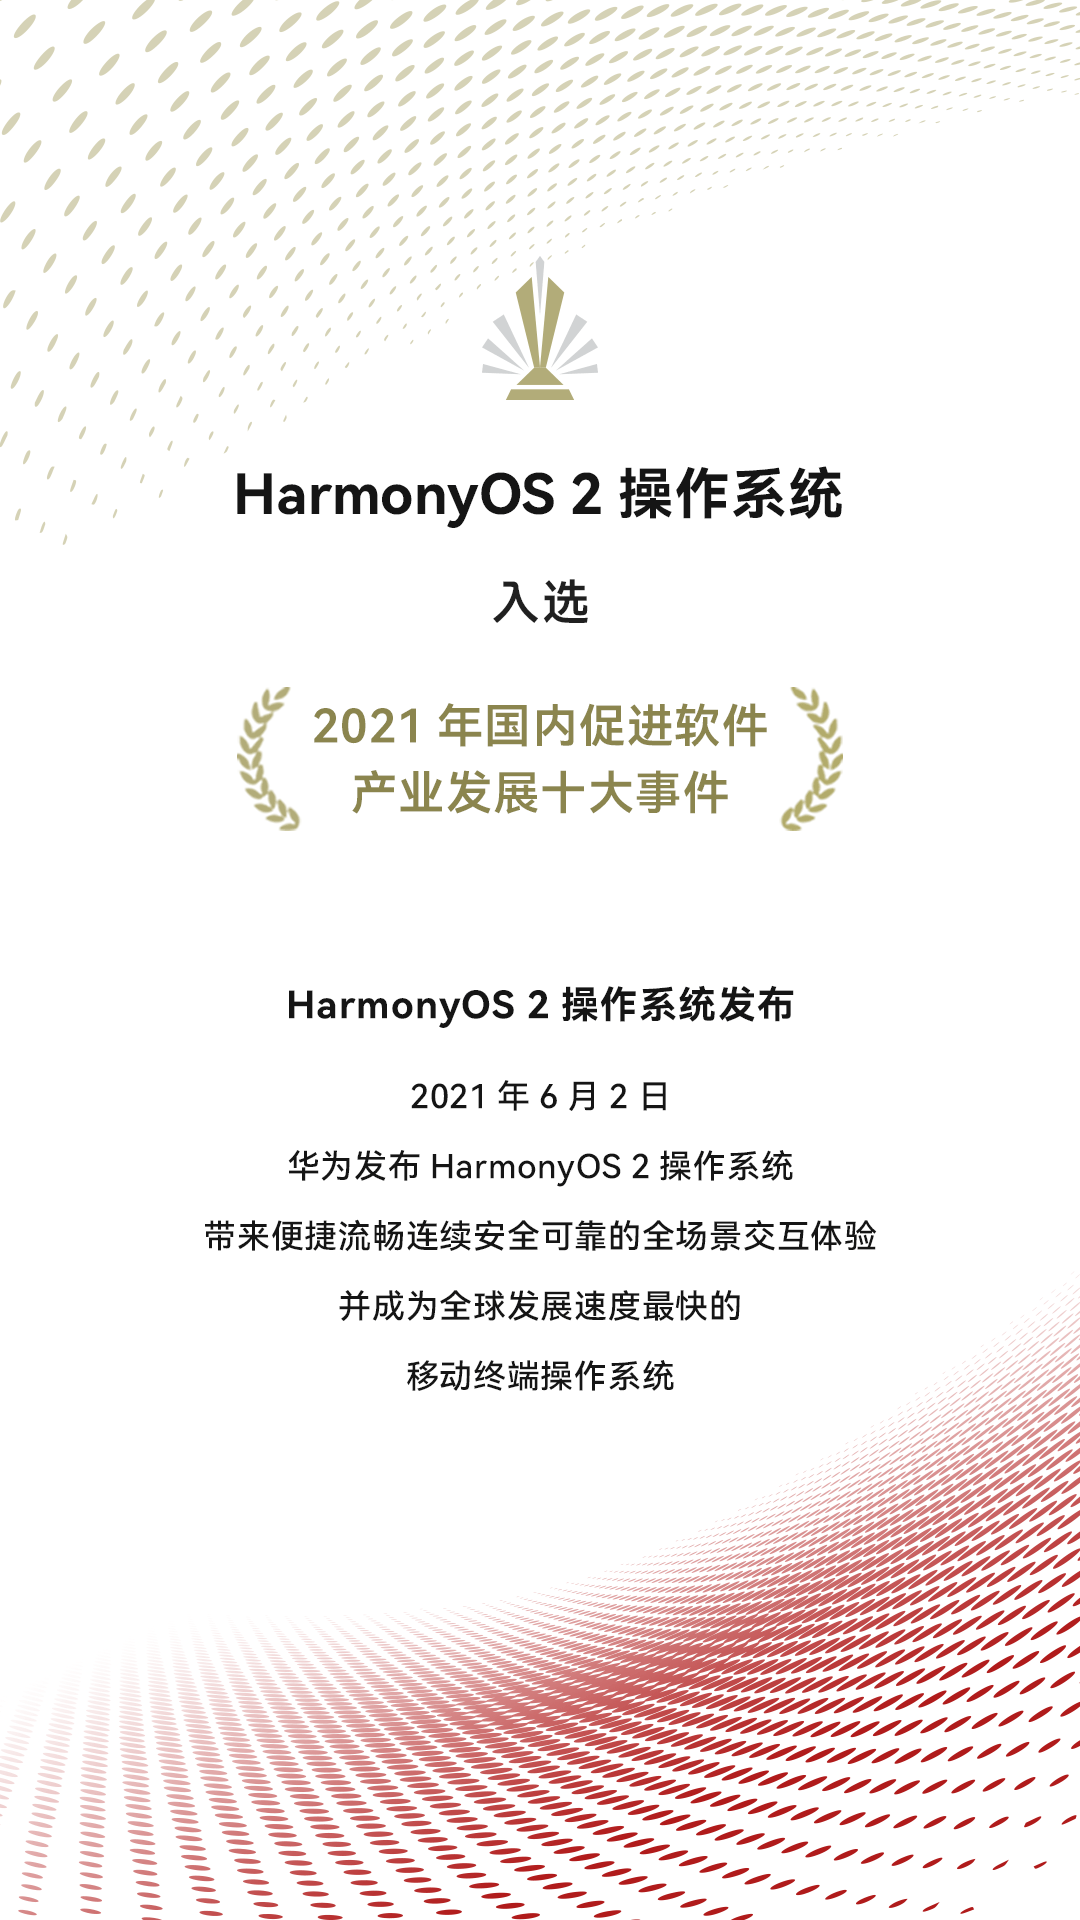 HarmonyOS 2成全球發展最快移動系統，入選2021軟件產業十大事件